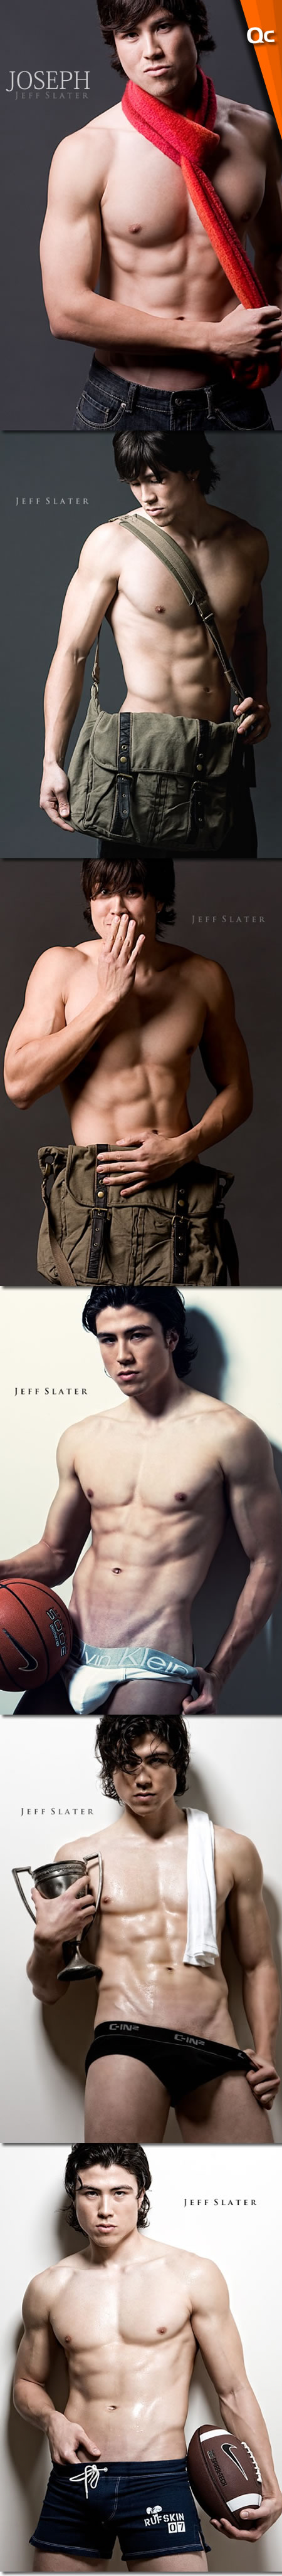 Joseph por Jeff Slater